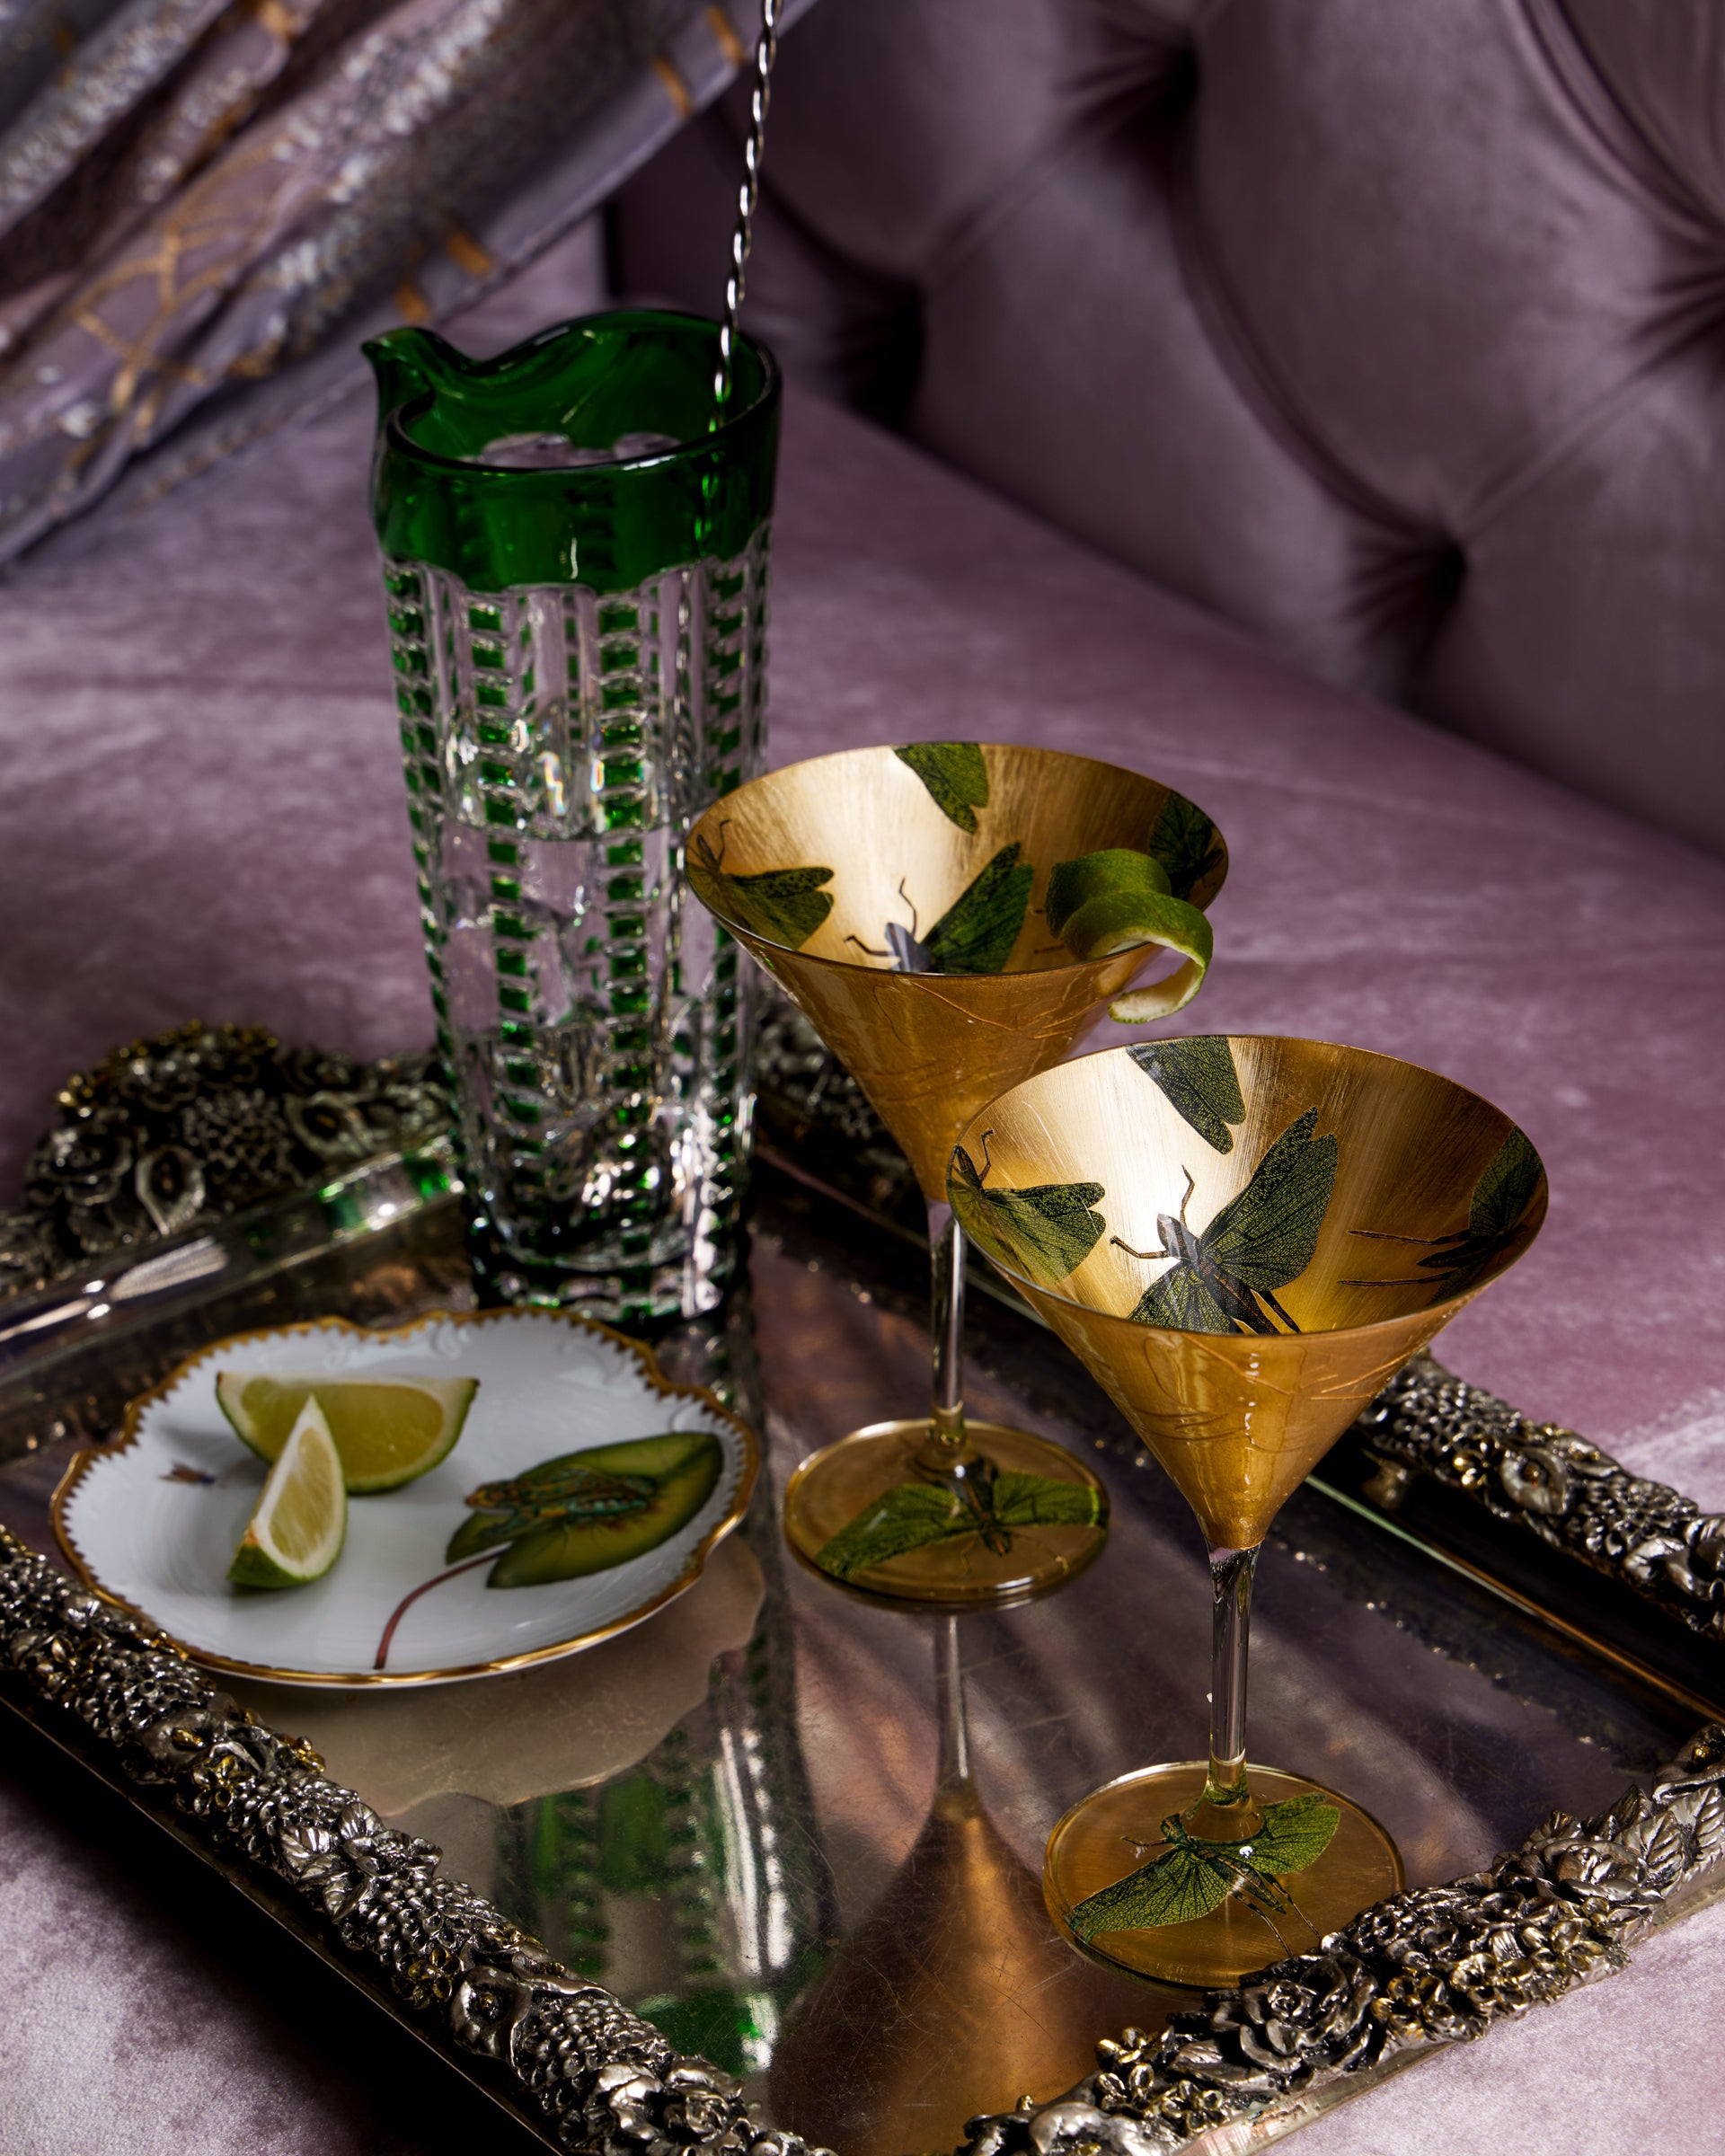 https://cdn.shopify.com/s/files/1/0064/1822/products/janes-vanity-in-the-style-of-jane-scott-potter-gilded-martini-glasses-green-grasshoppers.jpg?v=1657829428